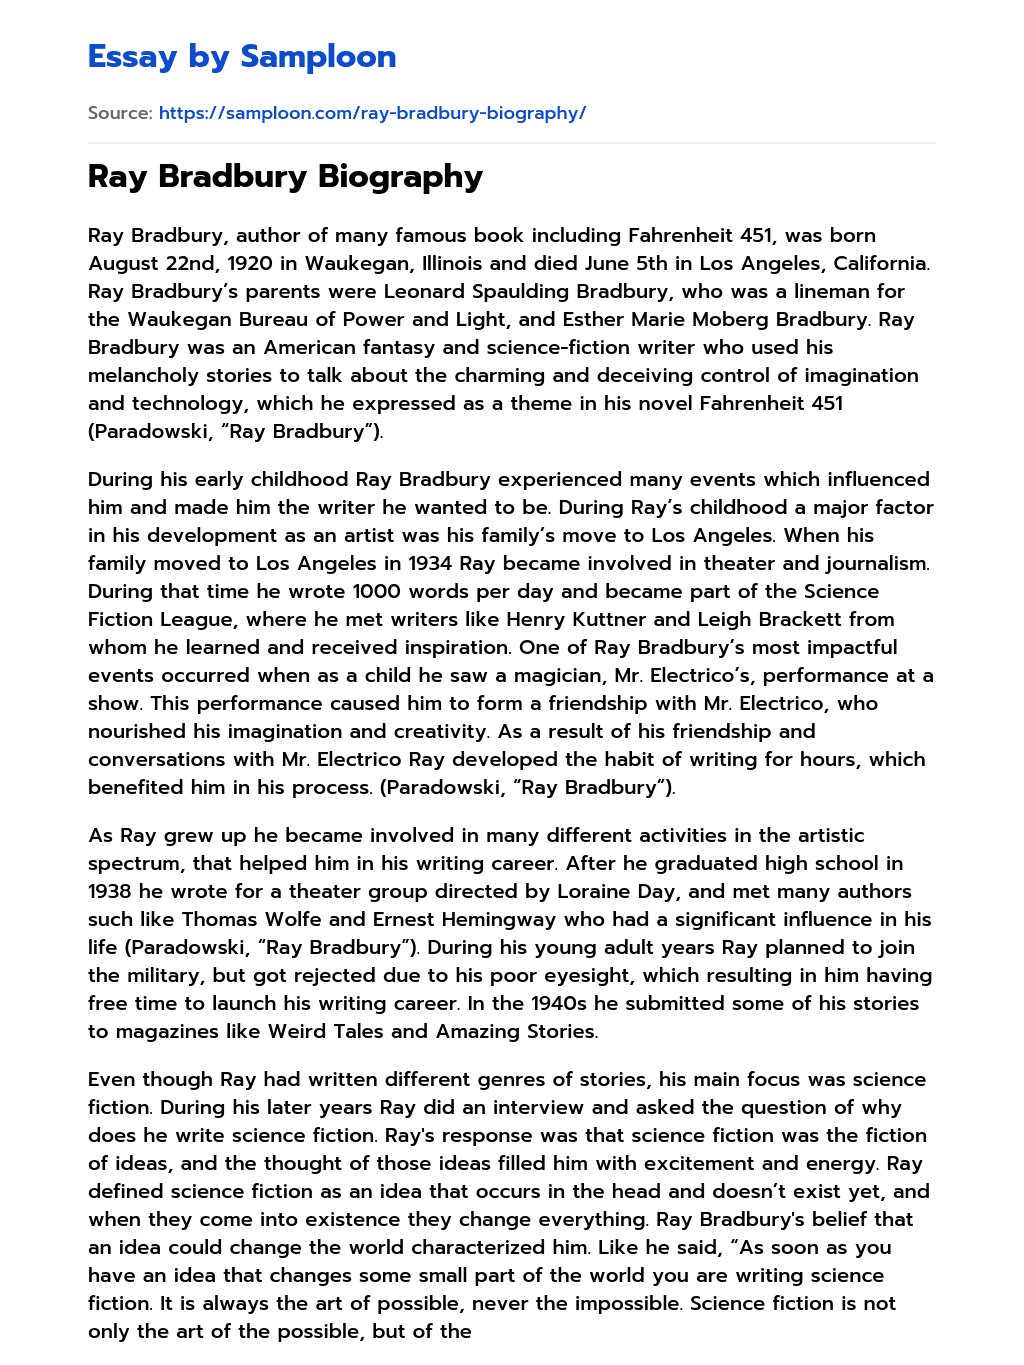 Ray Bradbury Biography essay